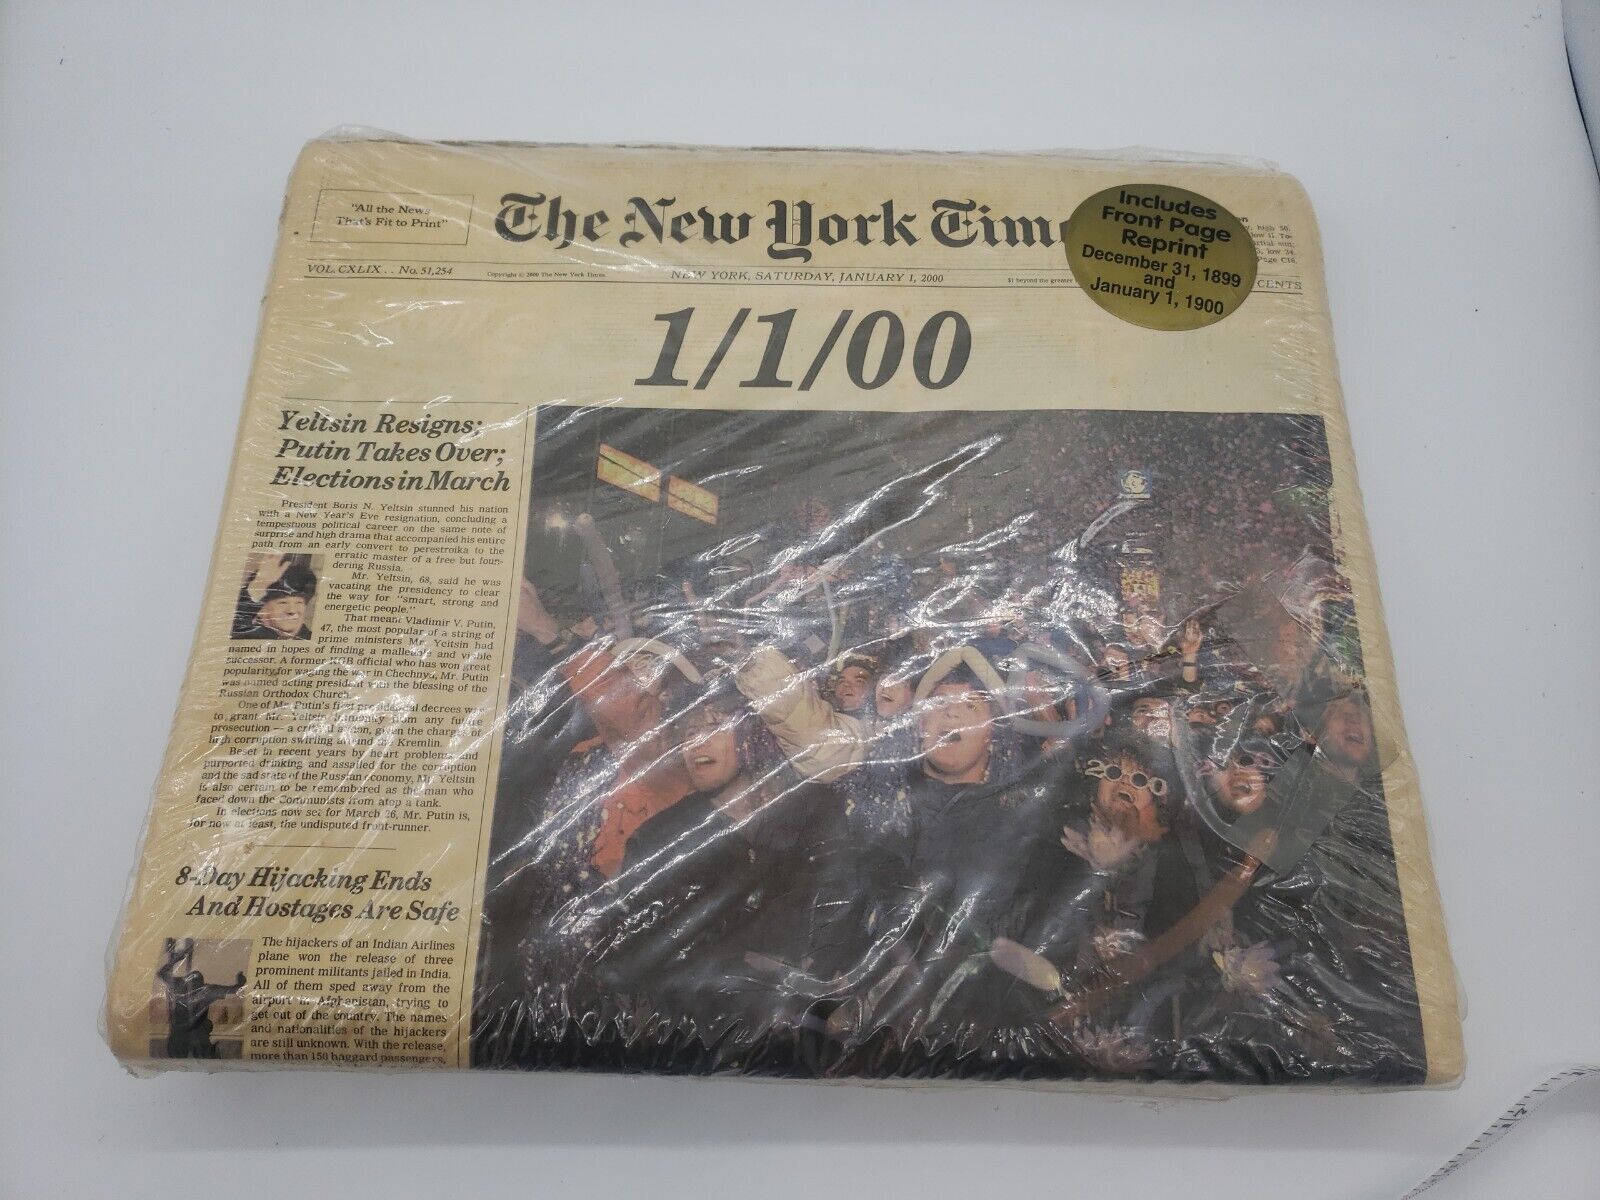 New York Times Newspaper New Century Original Copies - 12/31/99 and 1/1/00 